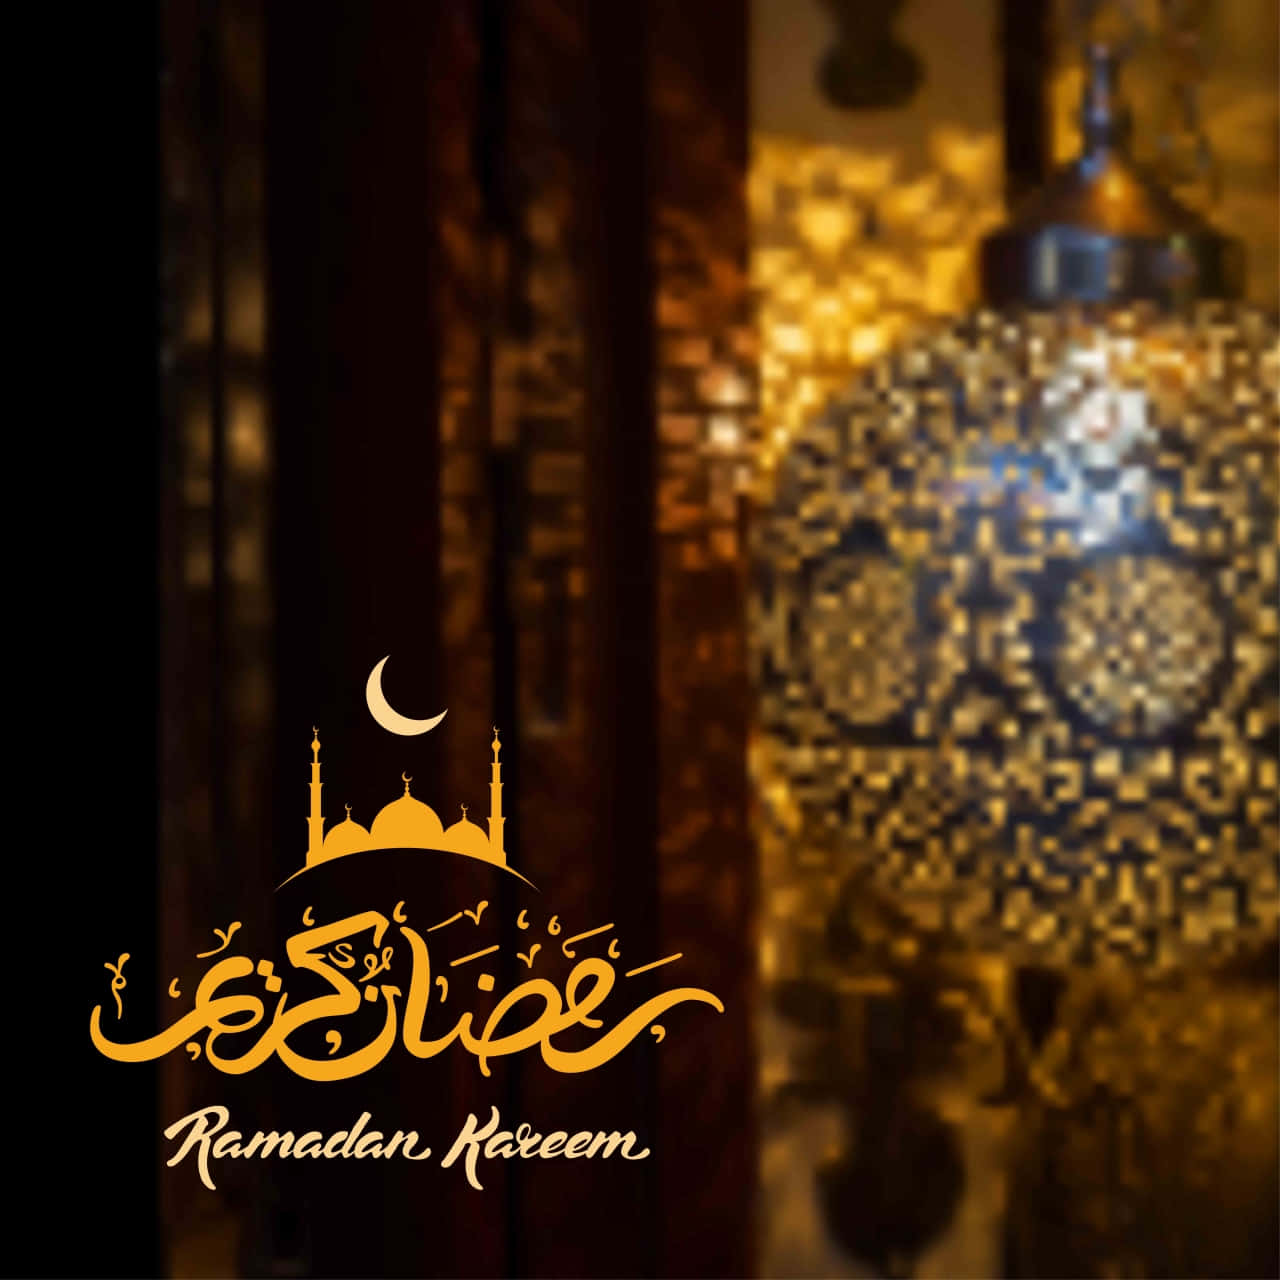 Gnistrendegyldent Ramadan-billede